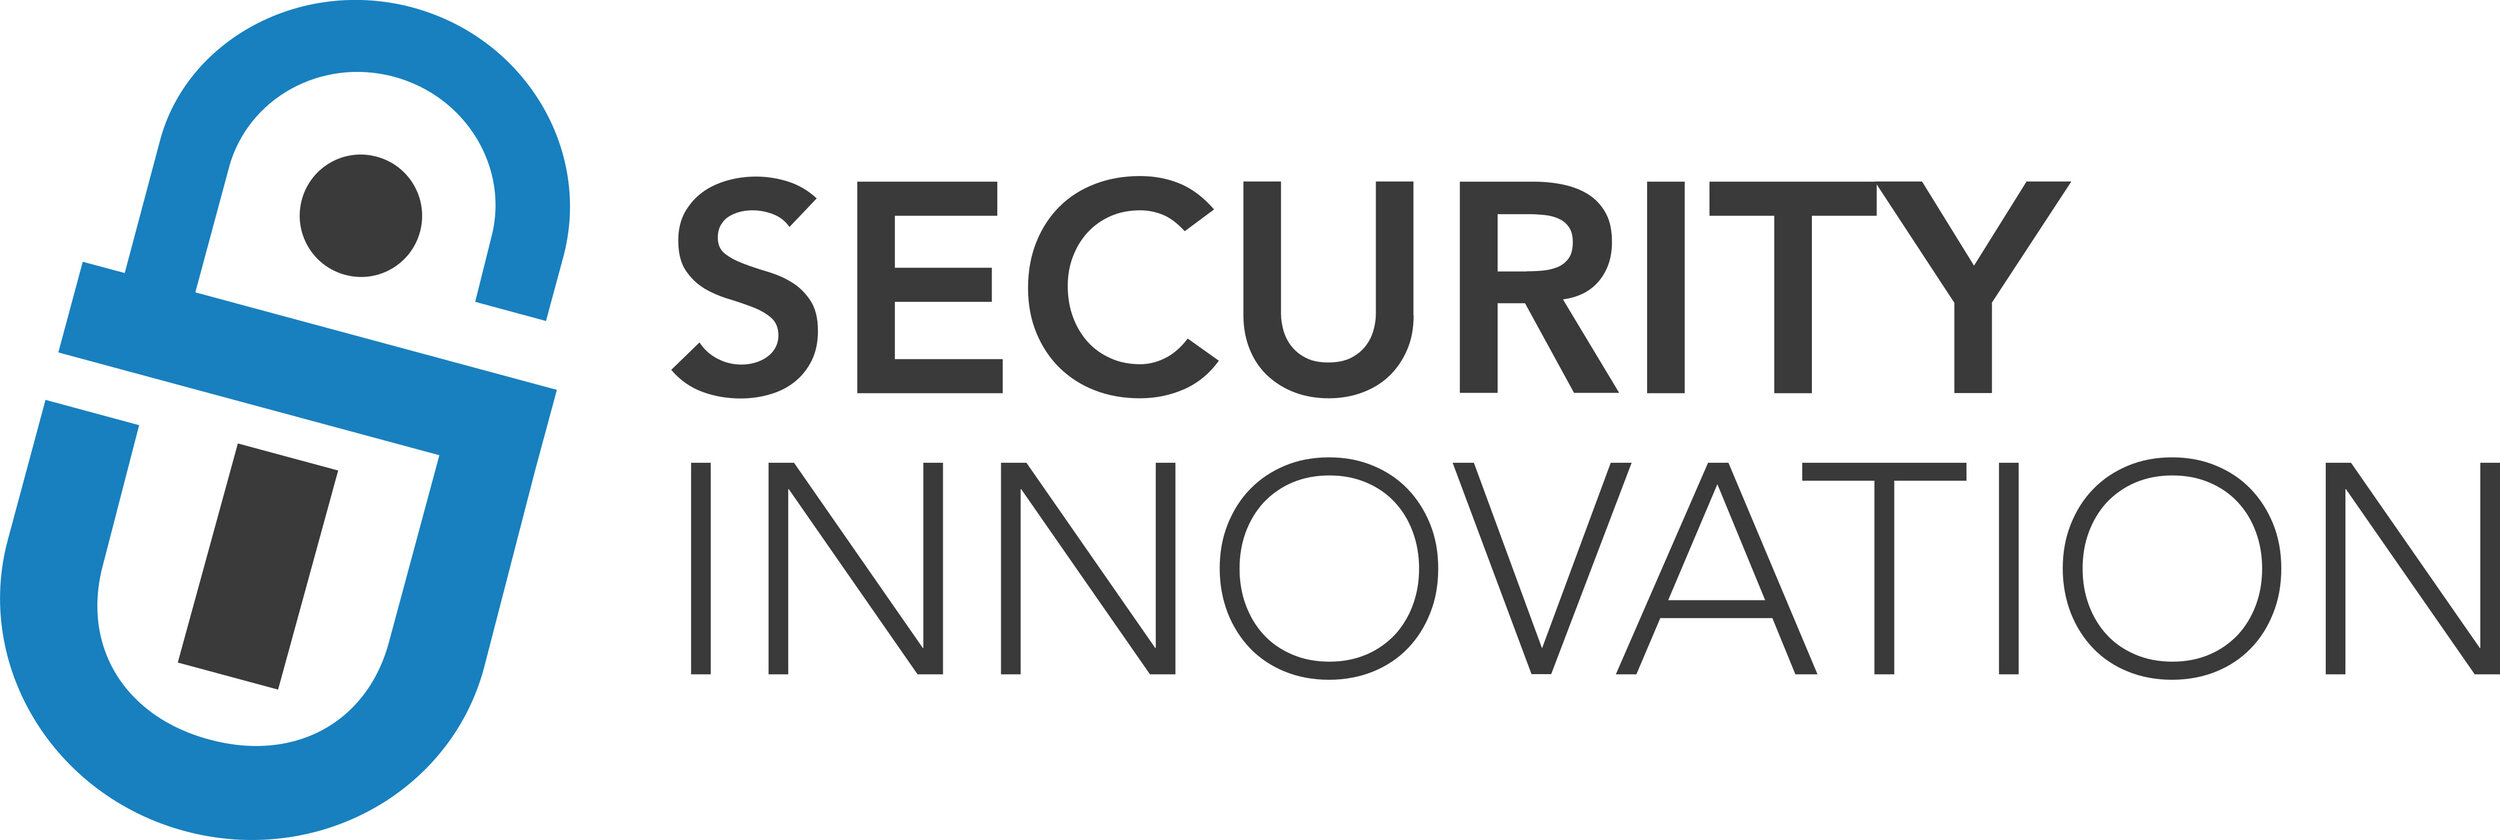 SicherheitInnovation-Logo.jpg